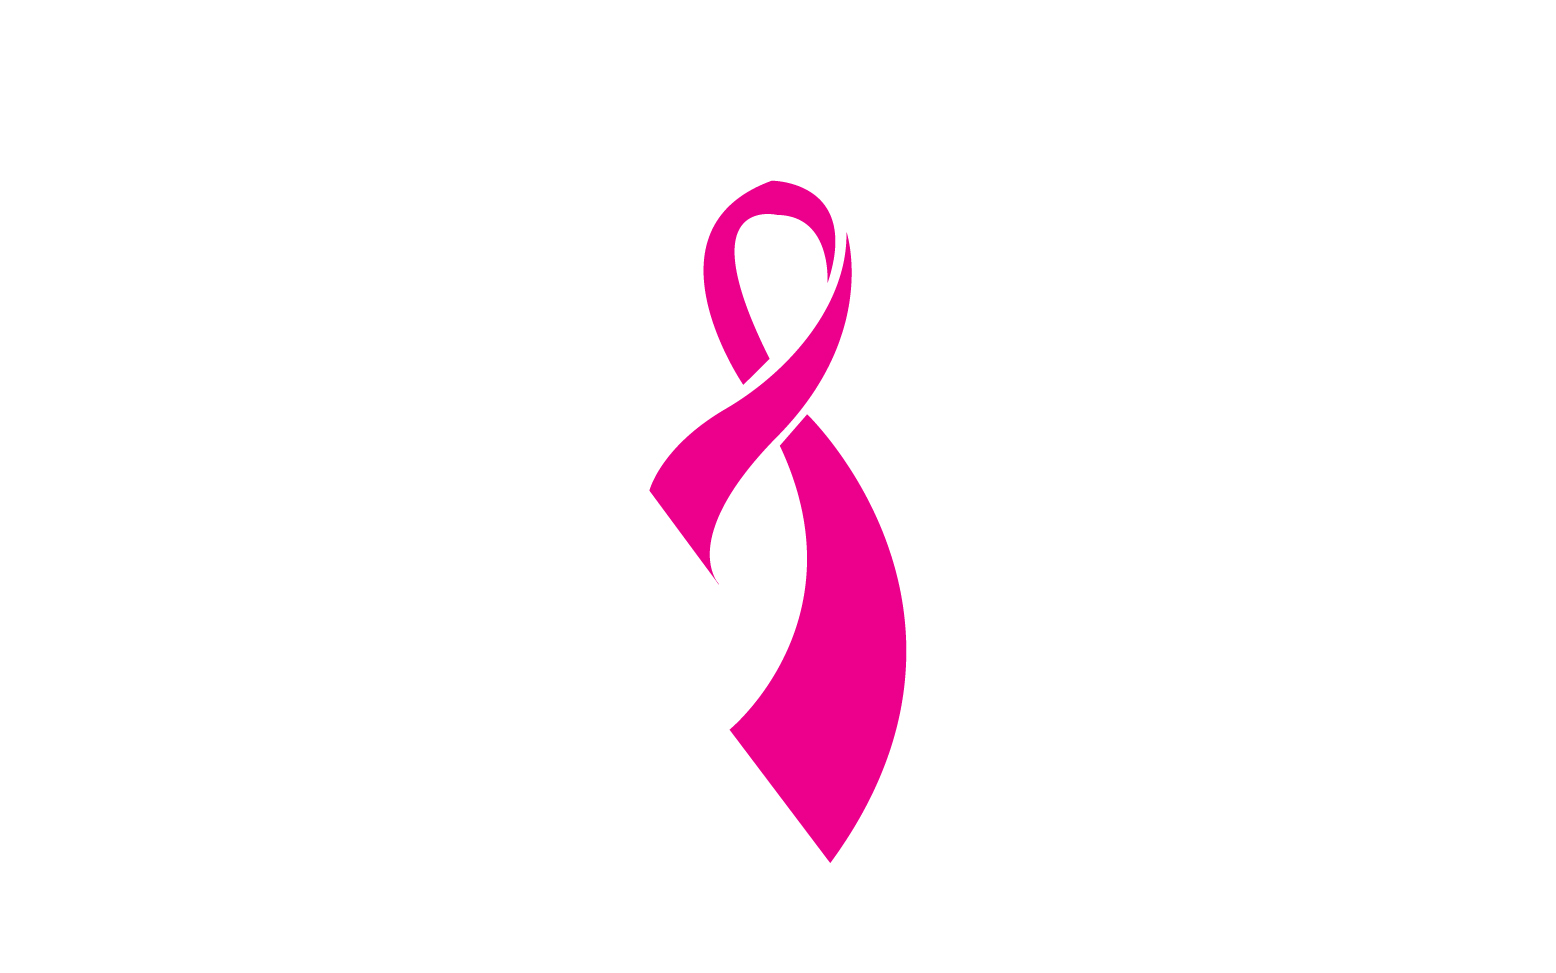 Ribbon pink icon logo element version v60